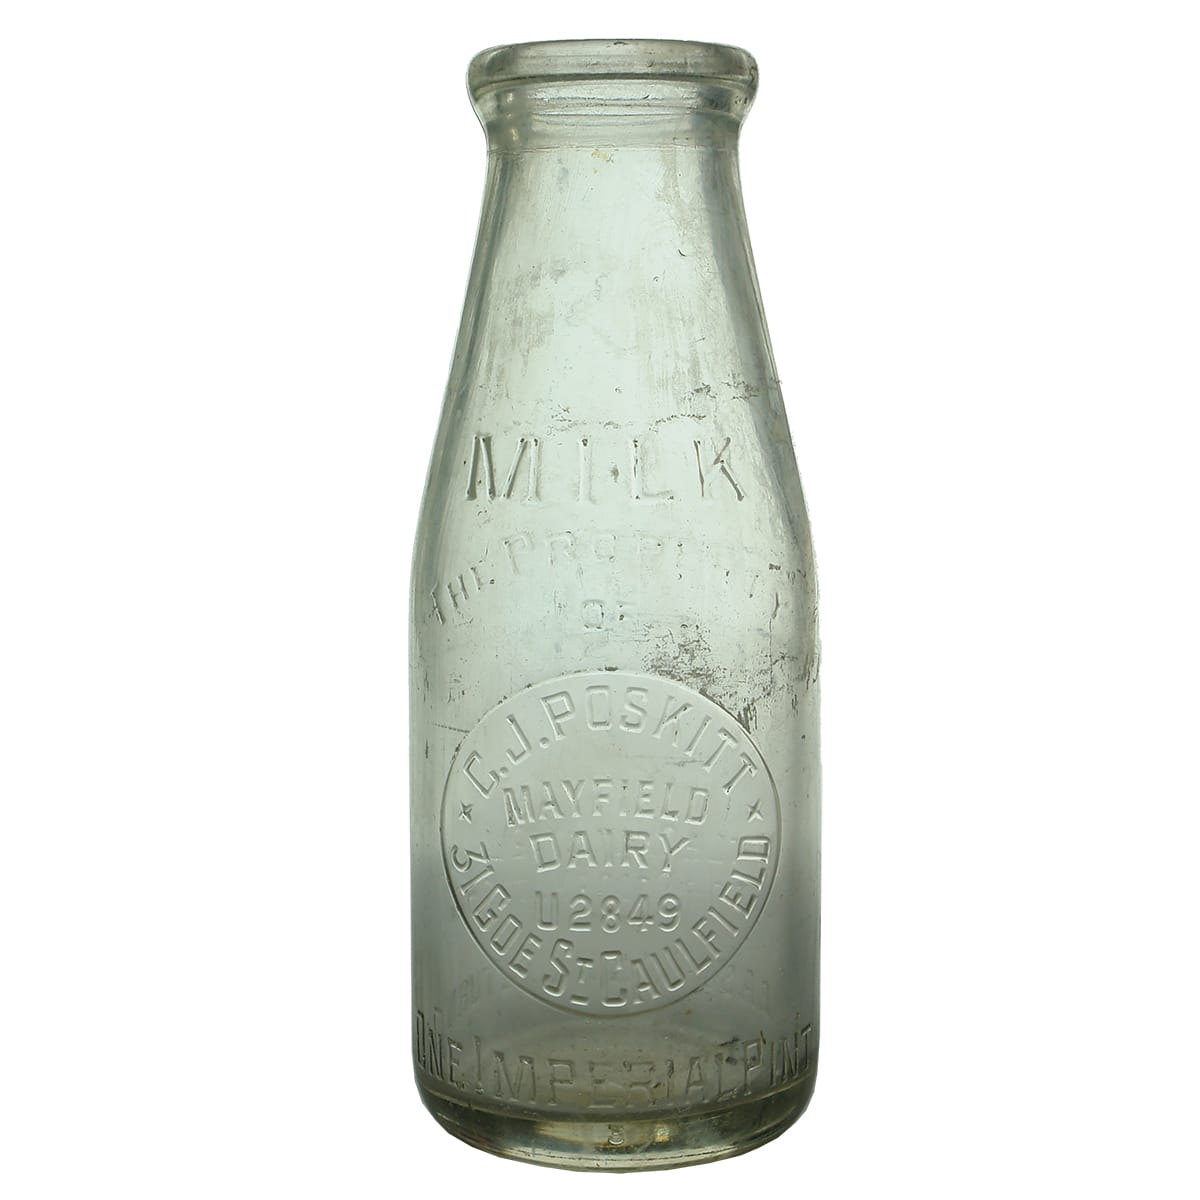 Milk. C. J. Poskitt, Mayfield Dairy, Caulfield. Wad top. Clear. 1 Pint. (Victoria)